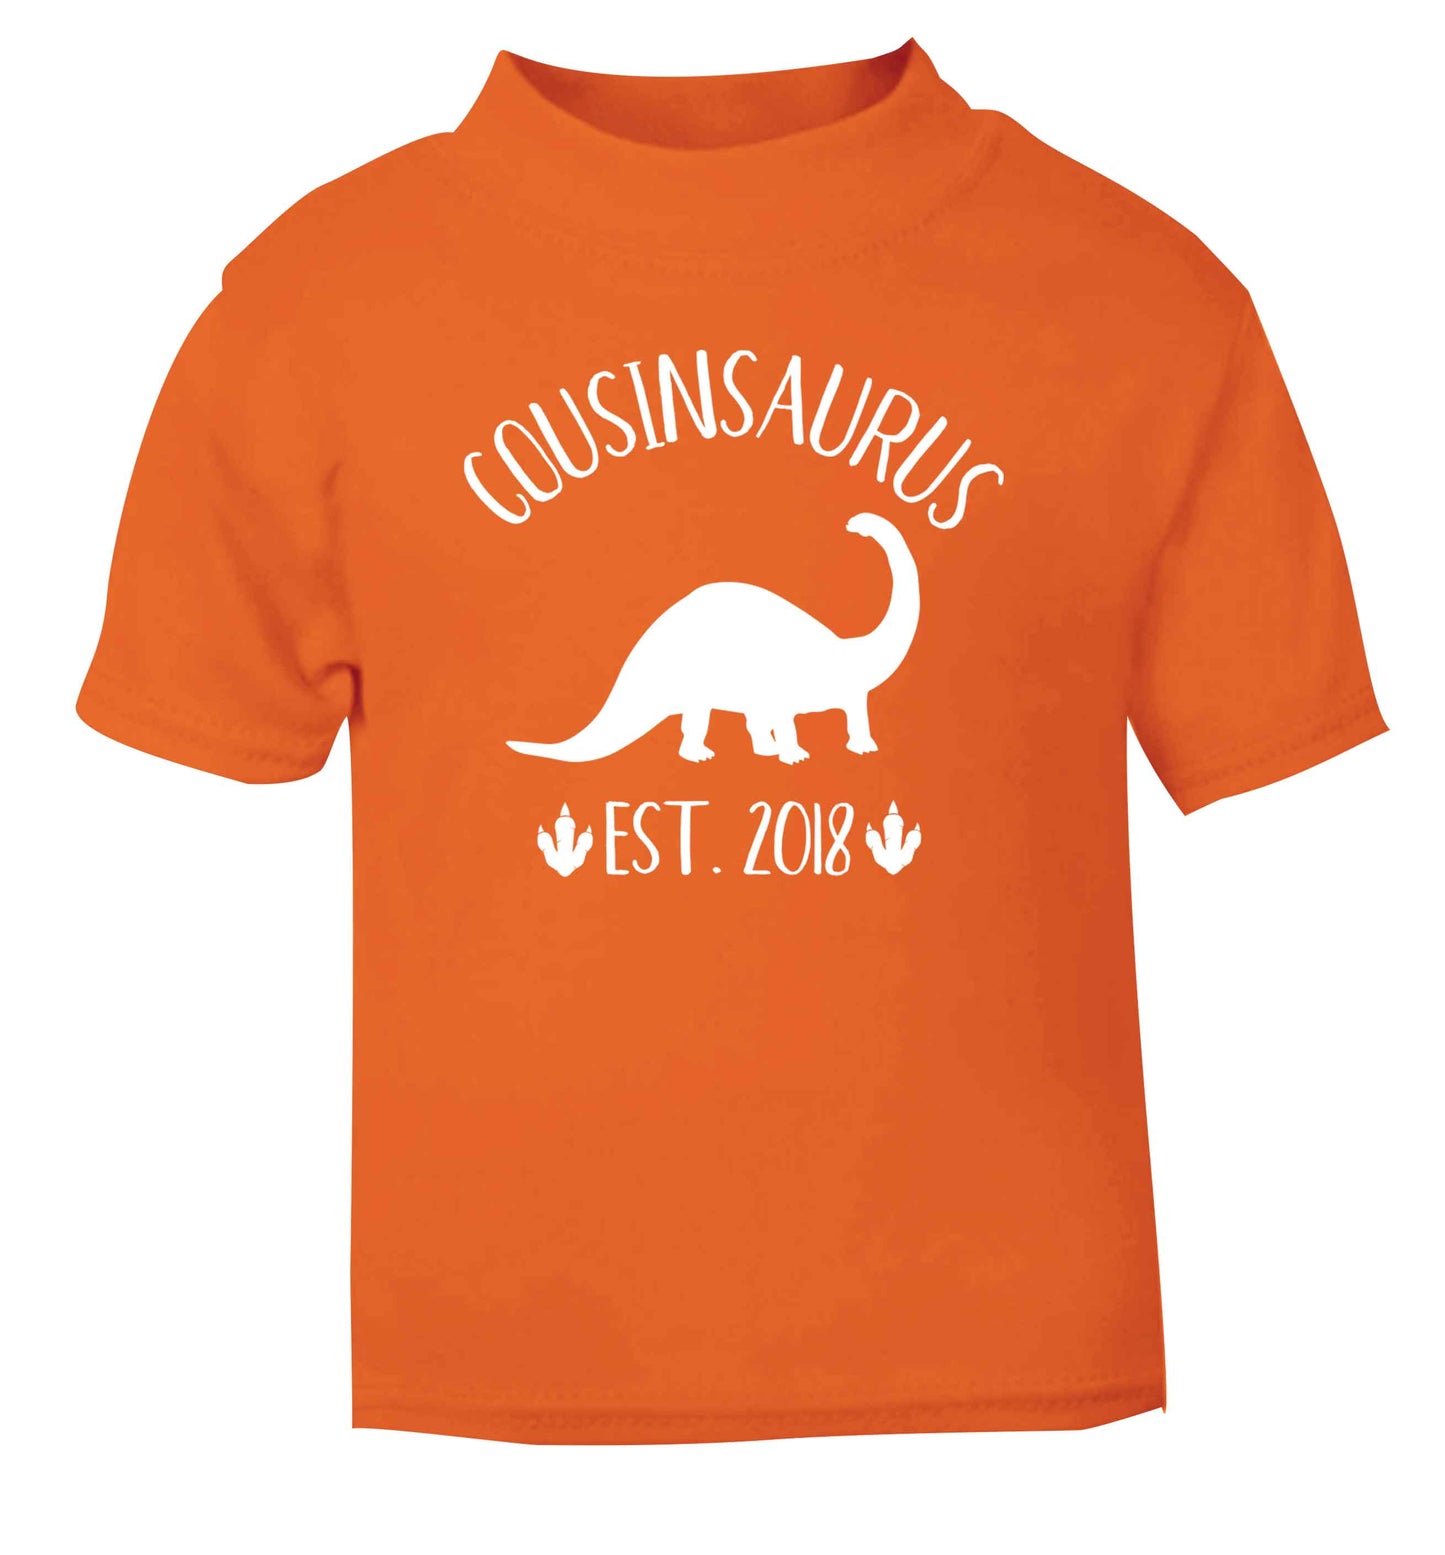 Personalised cousinsaurus since (custom date) orange Baby Toddler Tshirt 2 Years